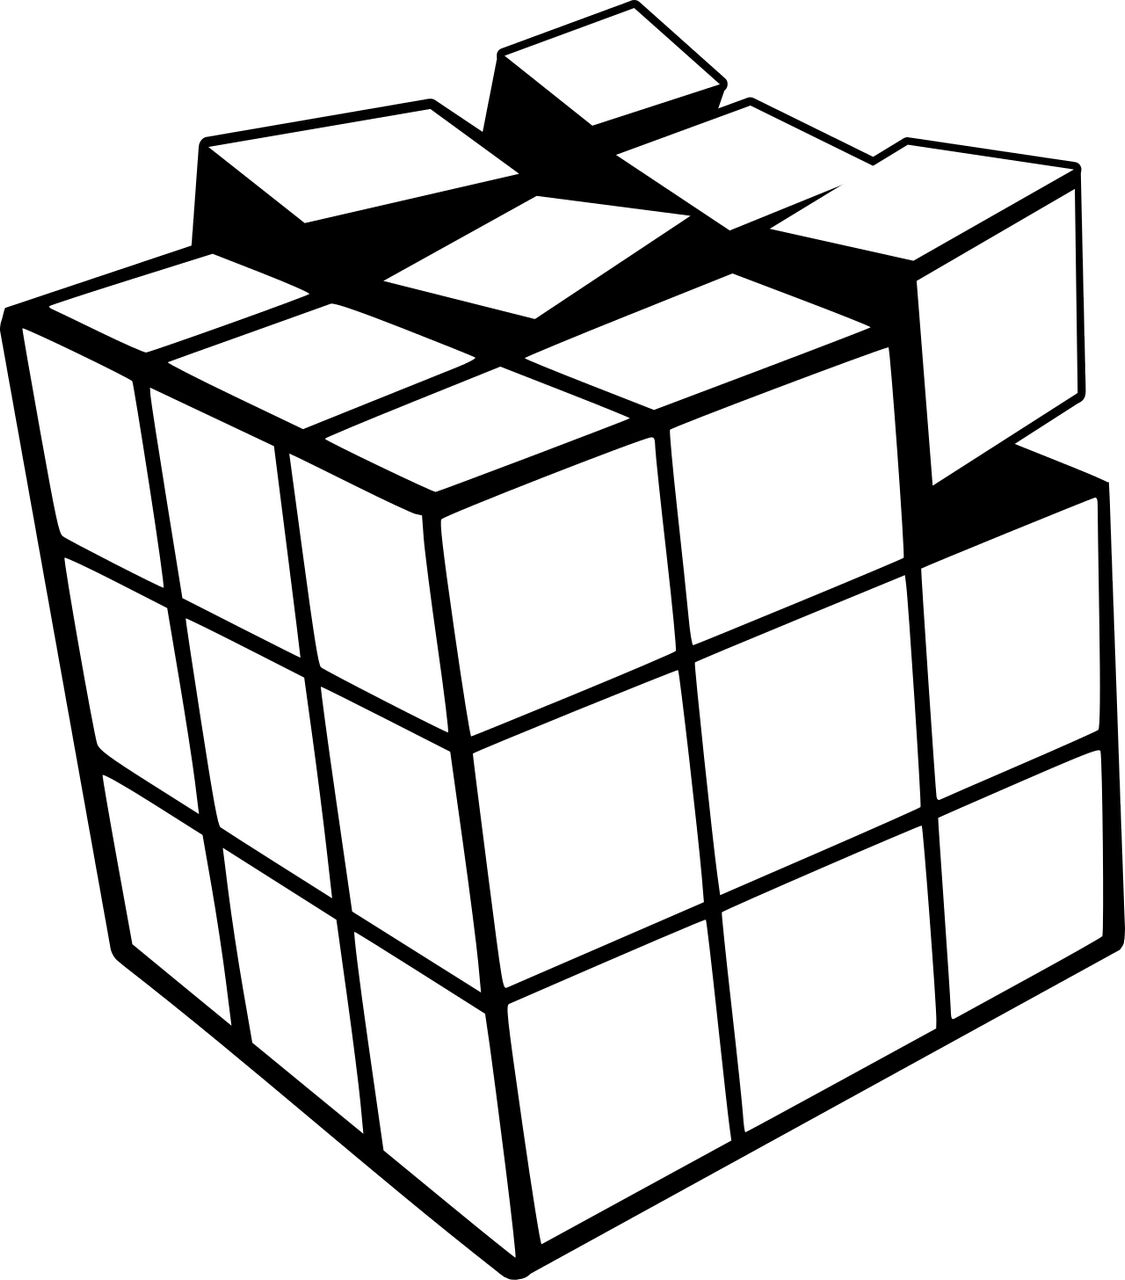 Omalovnka Rubikova kostka k vytisknut na A4